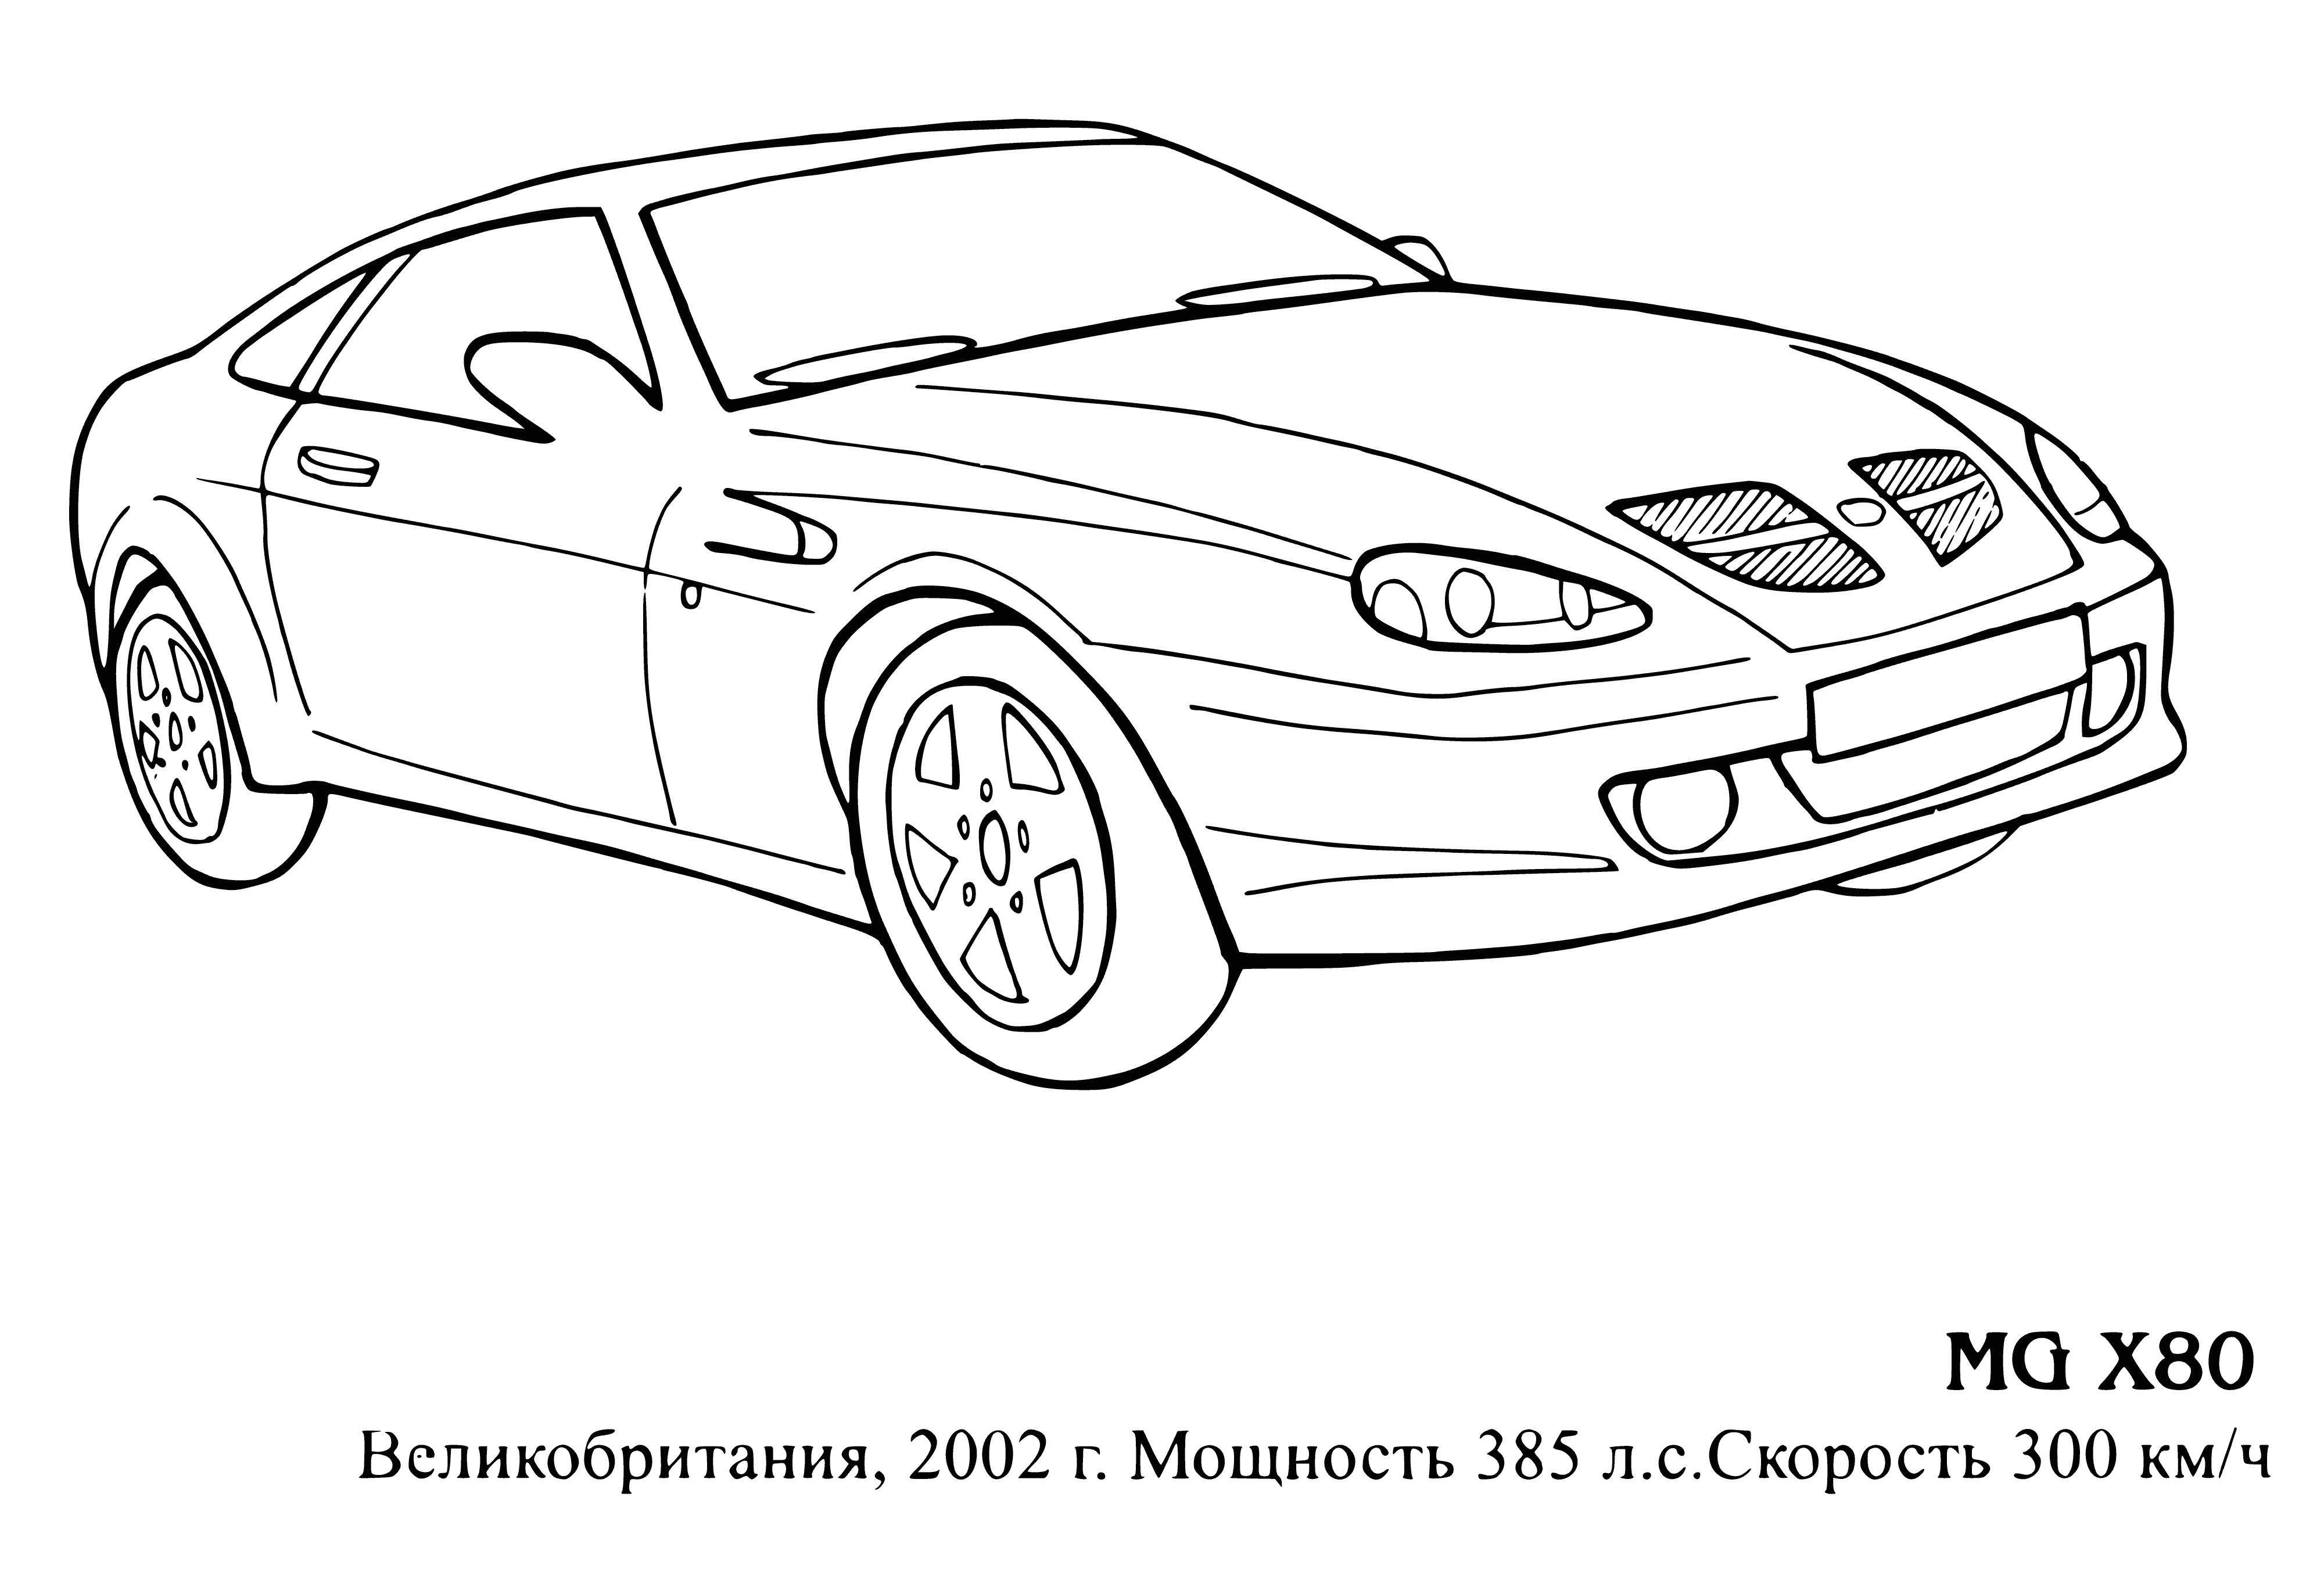 MG X80 kolorowanka